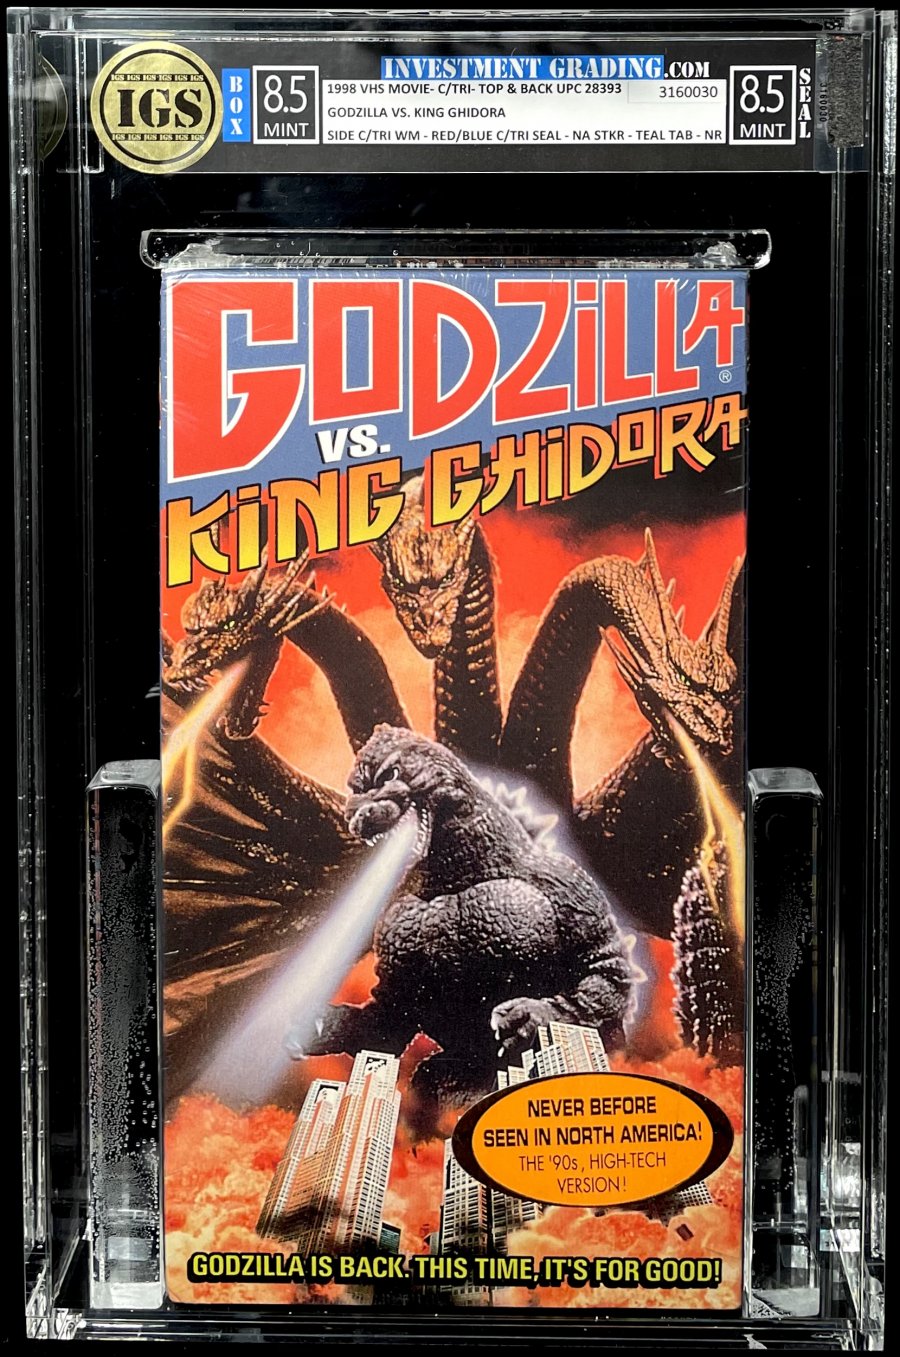 ComicConnect - GODZILLA VS. KING GHIDORAH (VHS) VHS - IGS VF+: 8.5